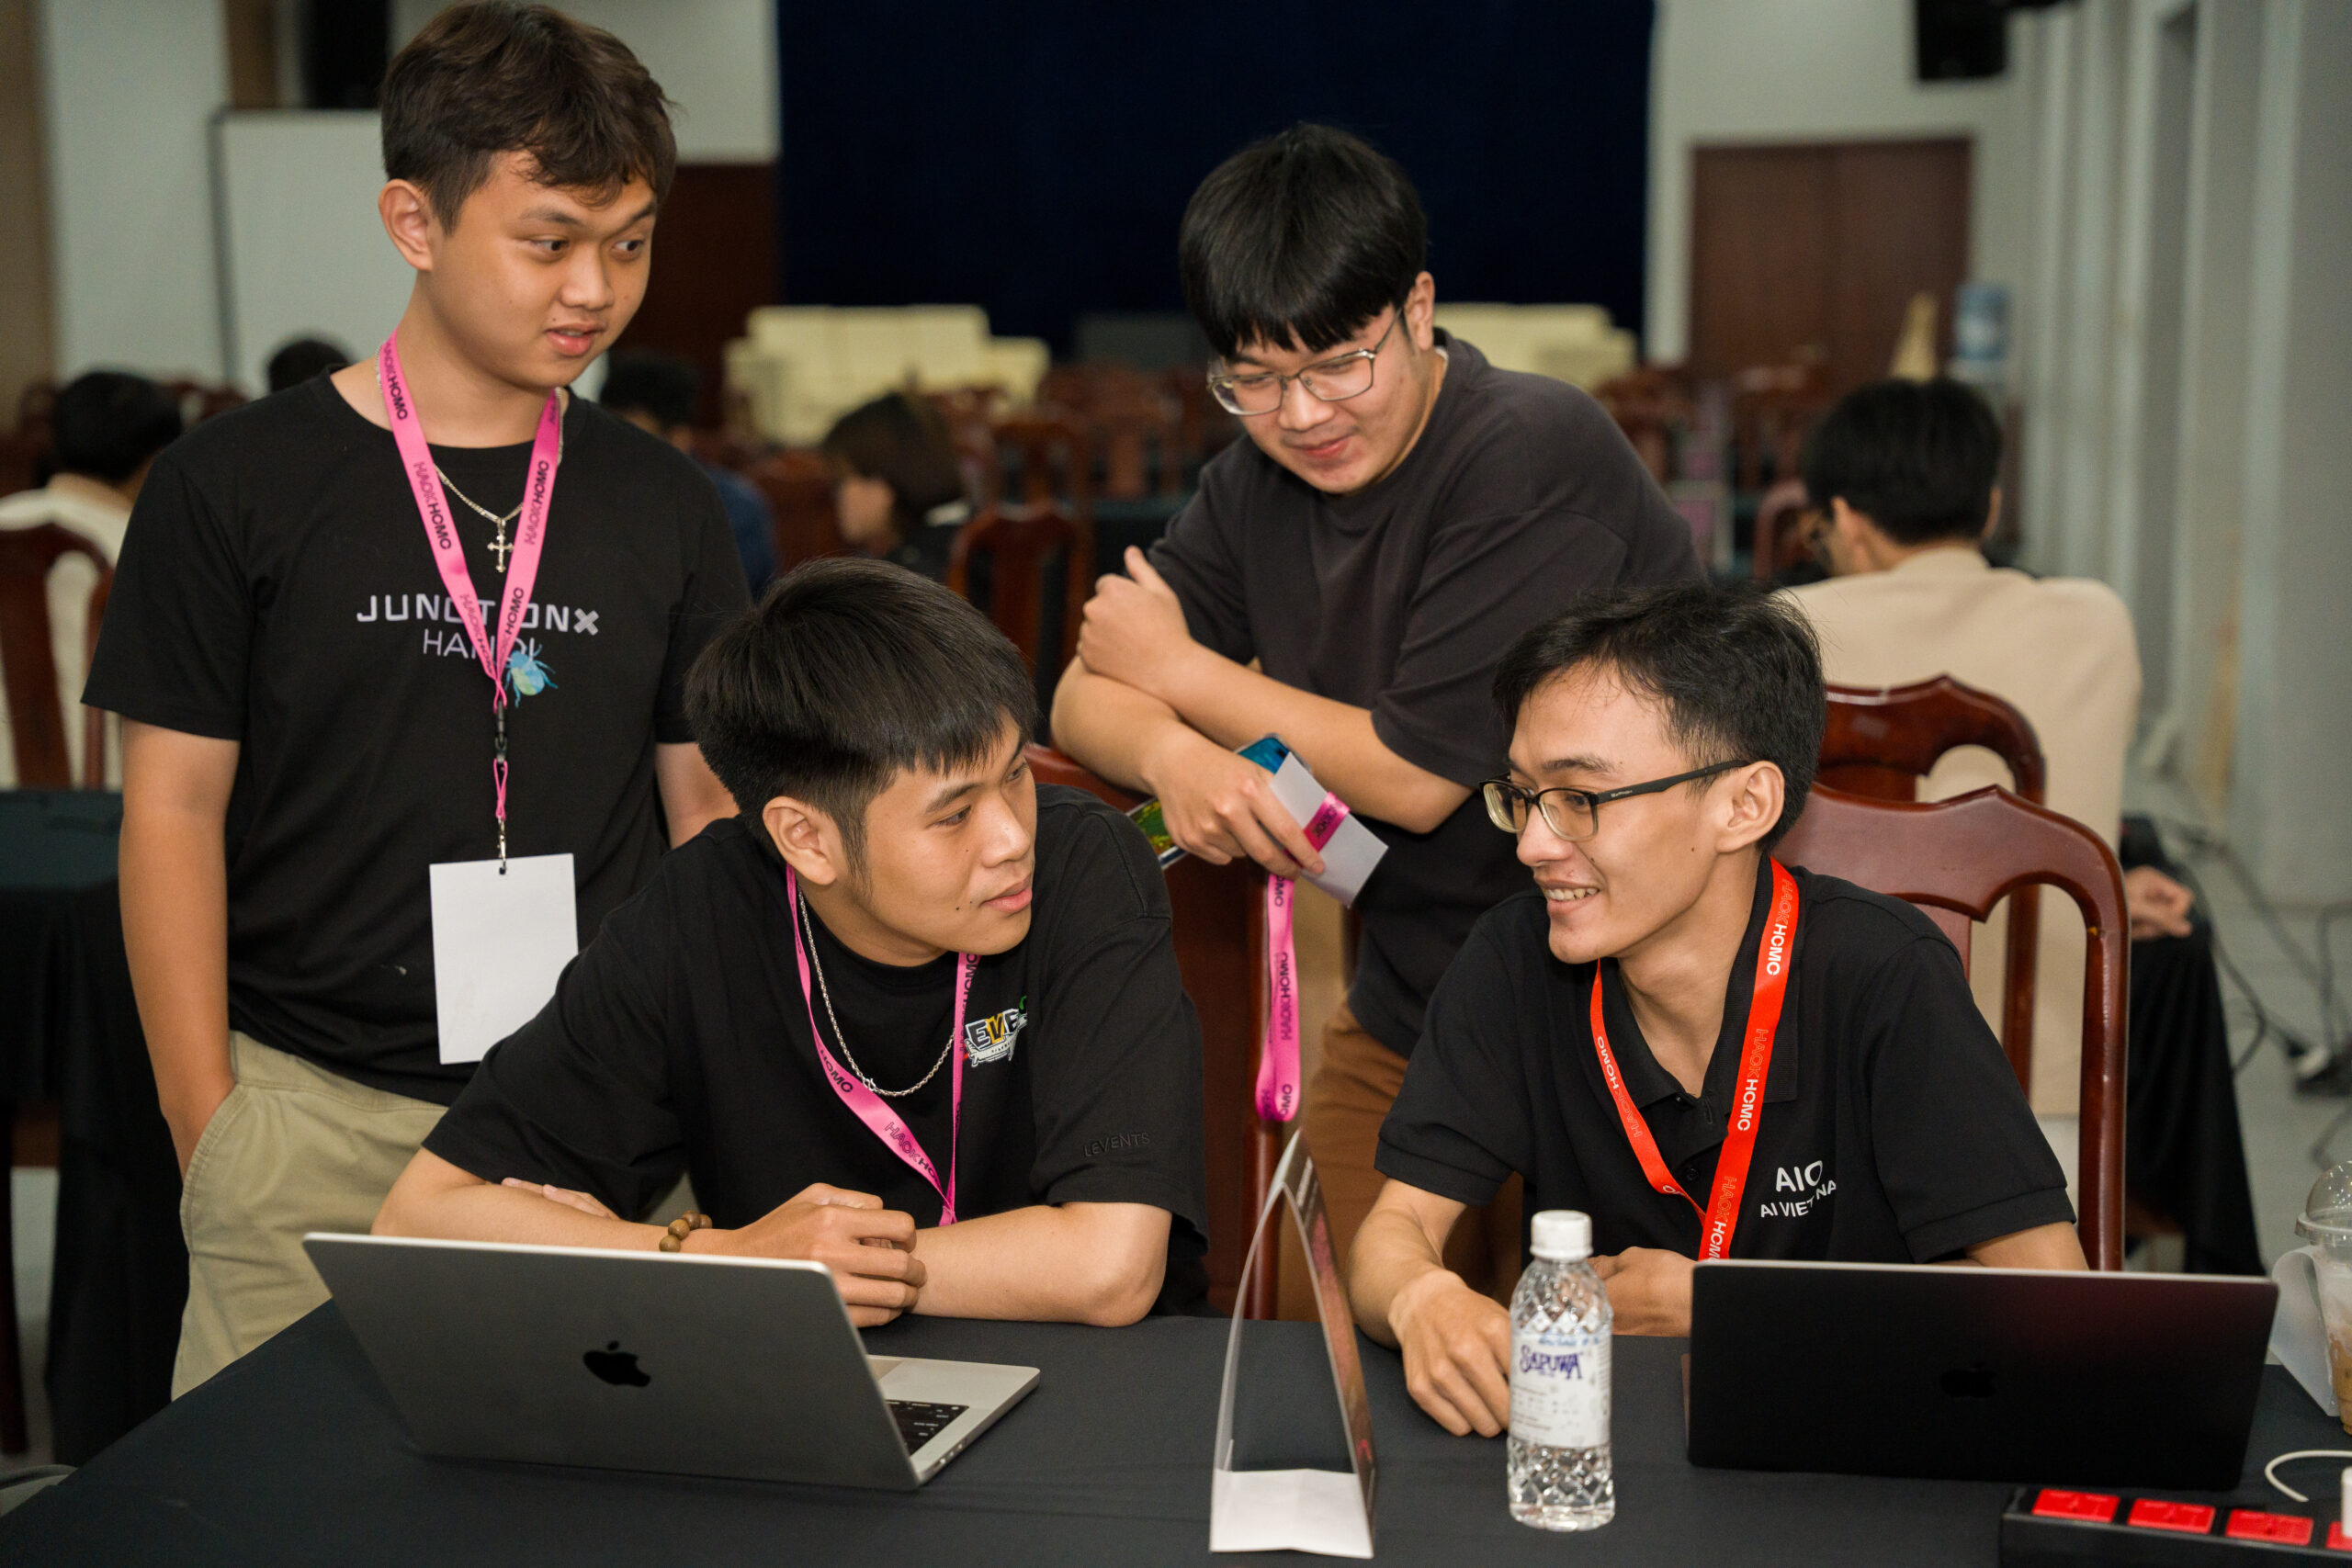 hackhcmc: The Pulse of Innovation in Ho Chi Minh City